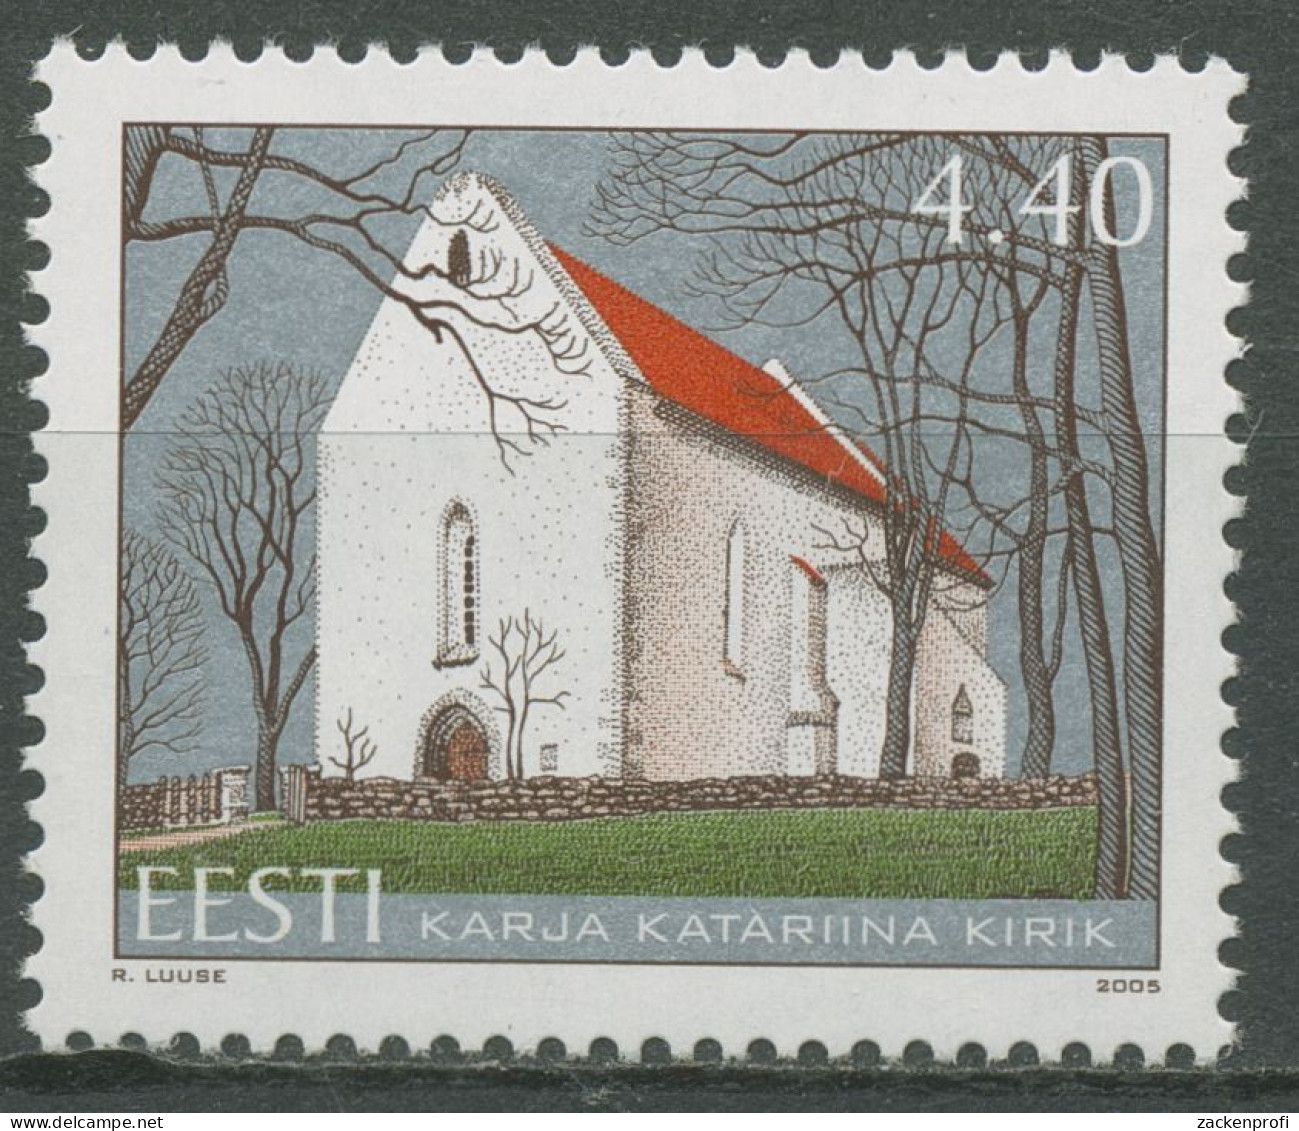 Estland 2005 St.-Katharinen-Kirche Karja 526 Postfrisch - Estonia